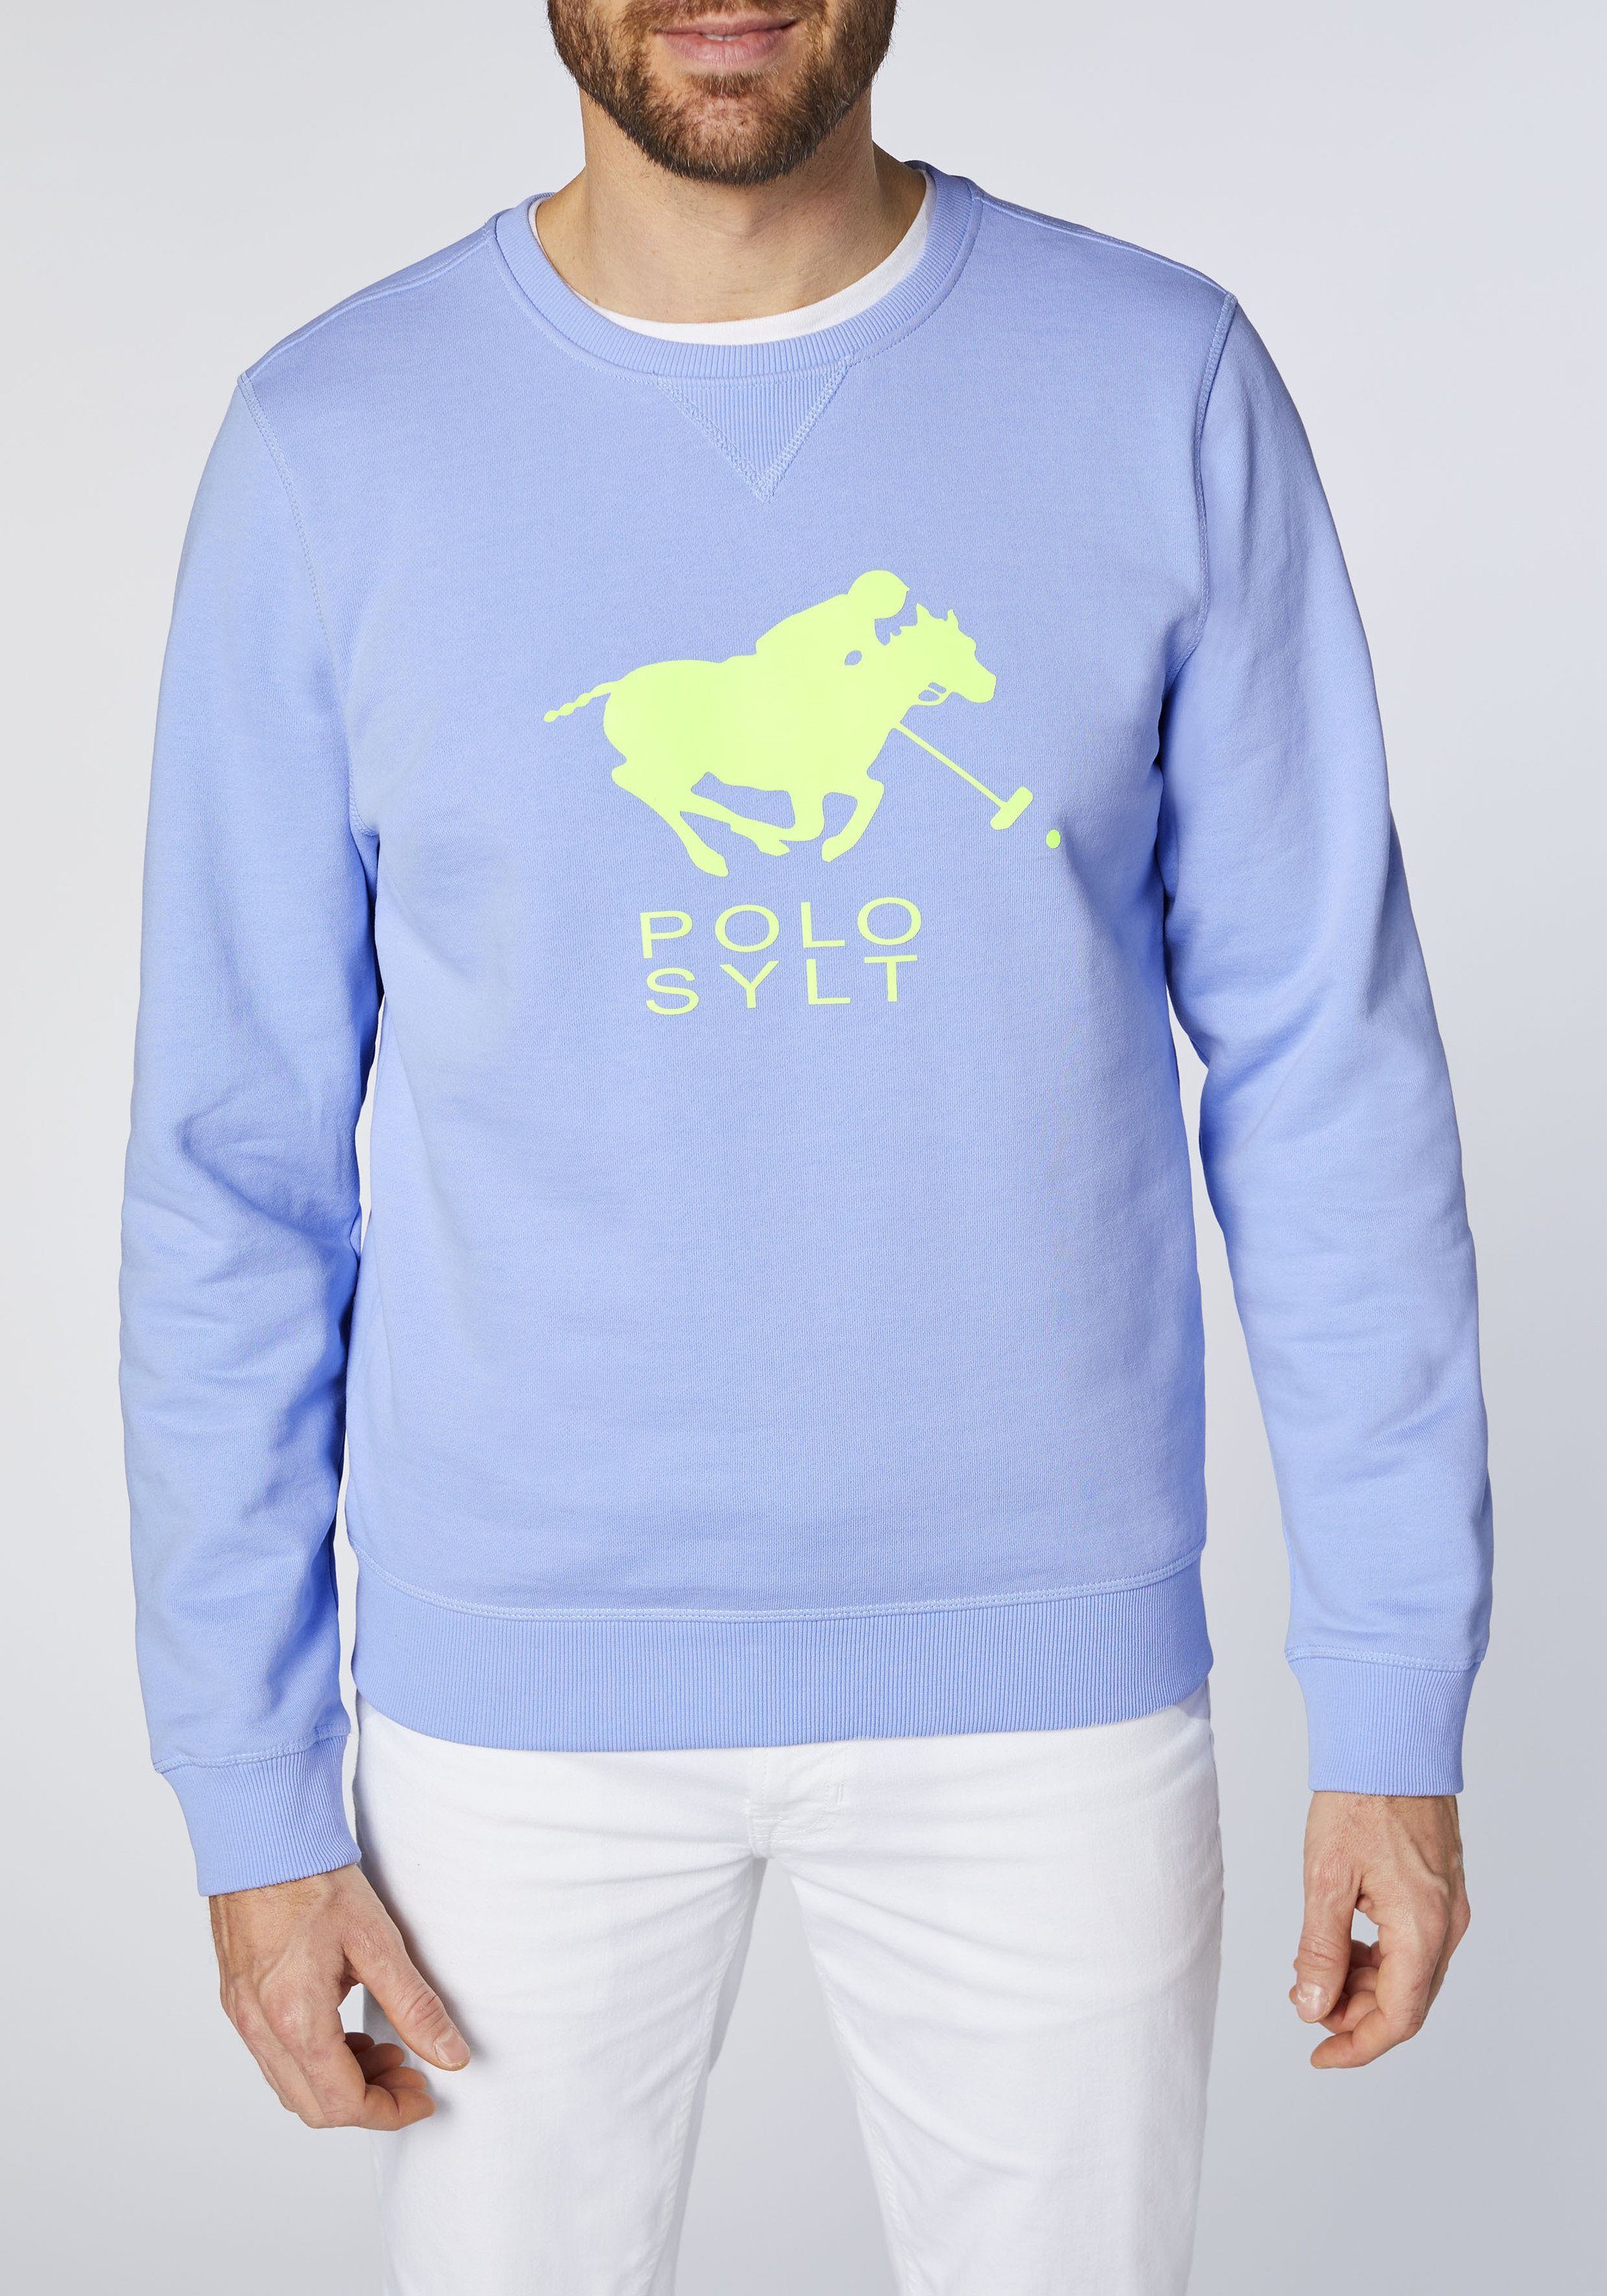 Brunnera Sylt Blue mit Polo Sweatshirt Label-Motiv